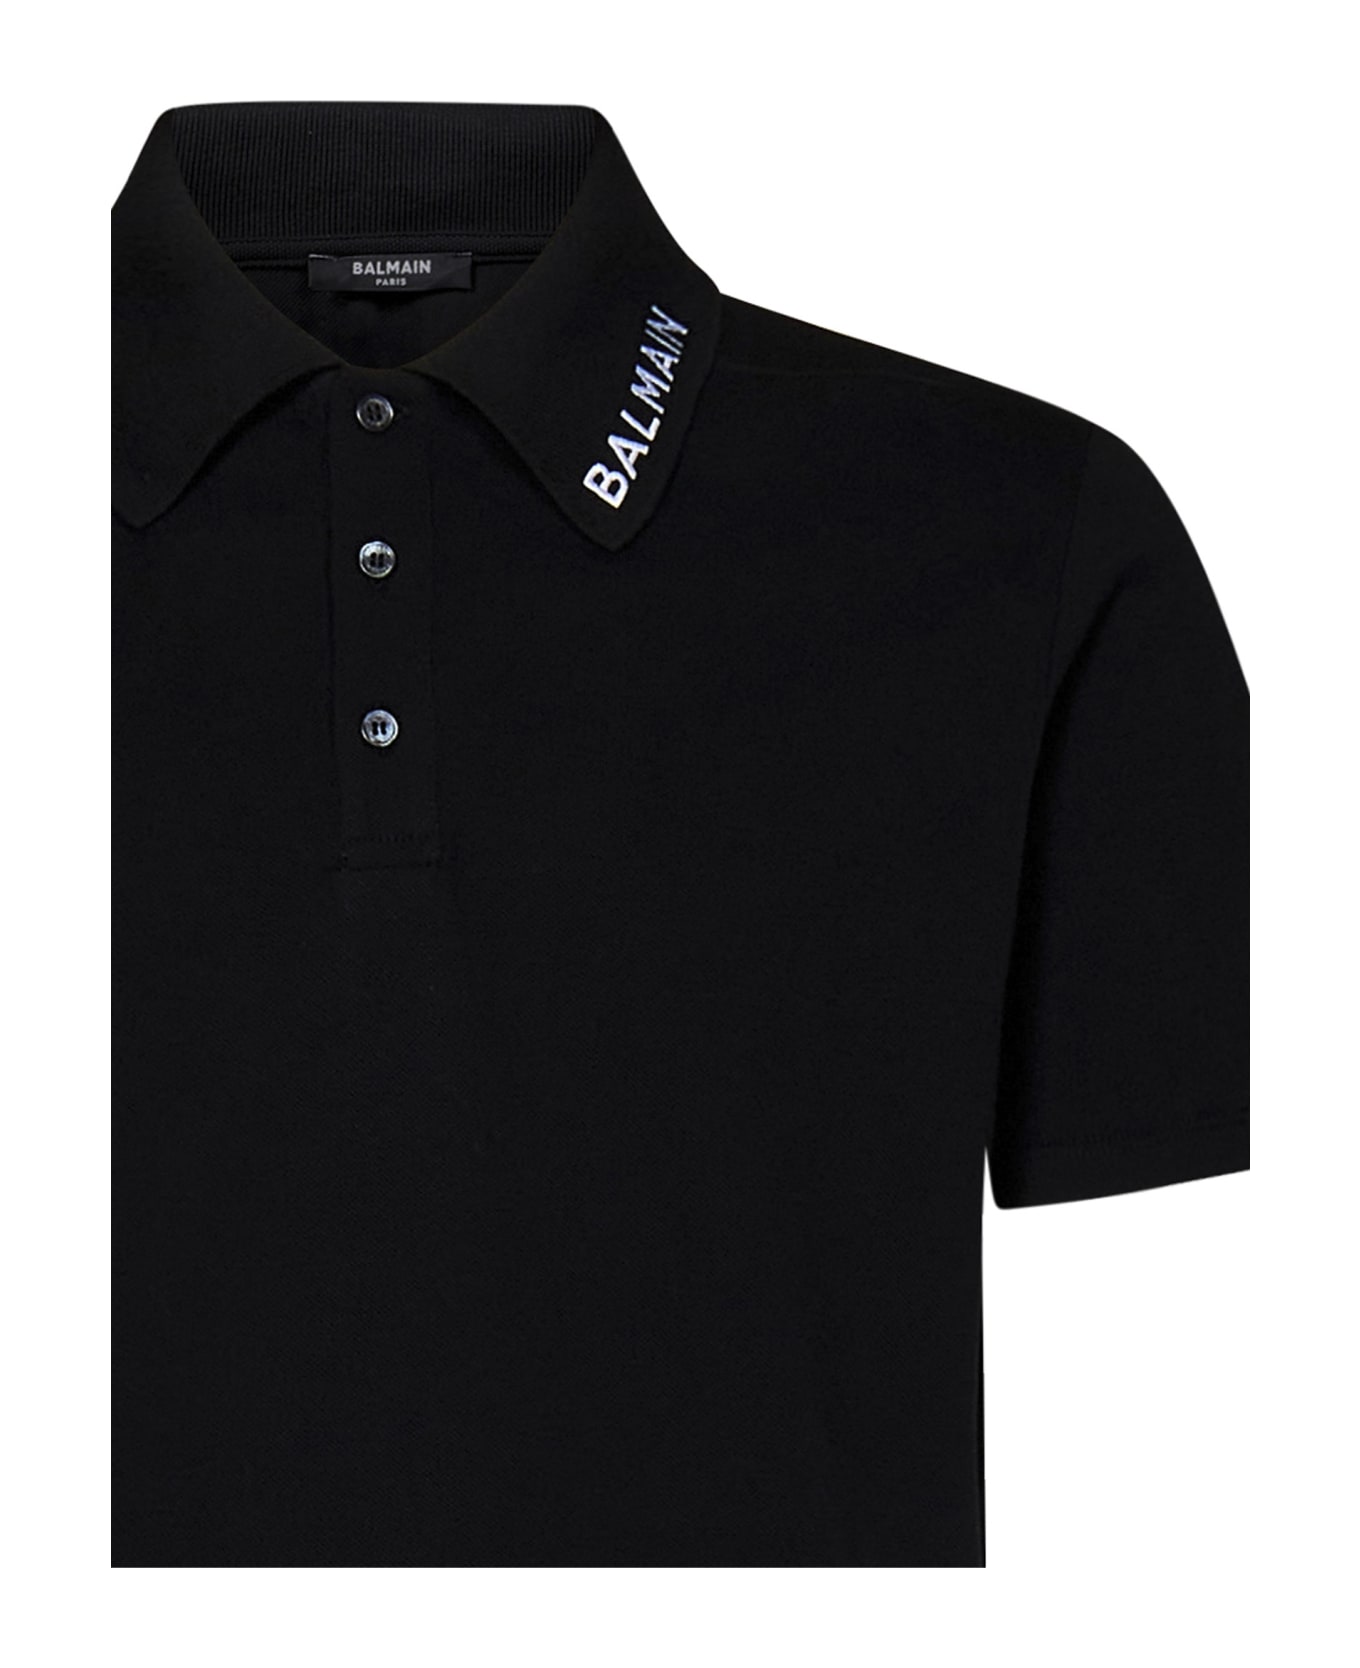 Balmain Paris Polo Shirt - Black